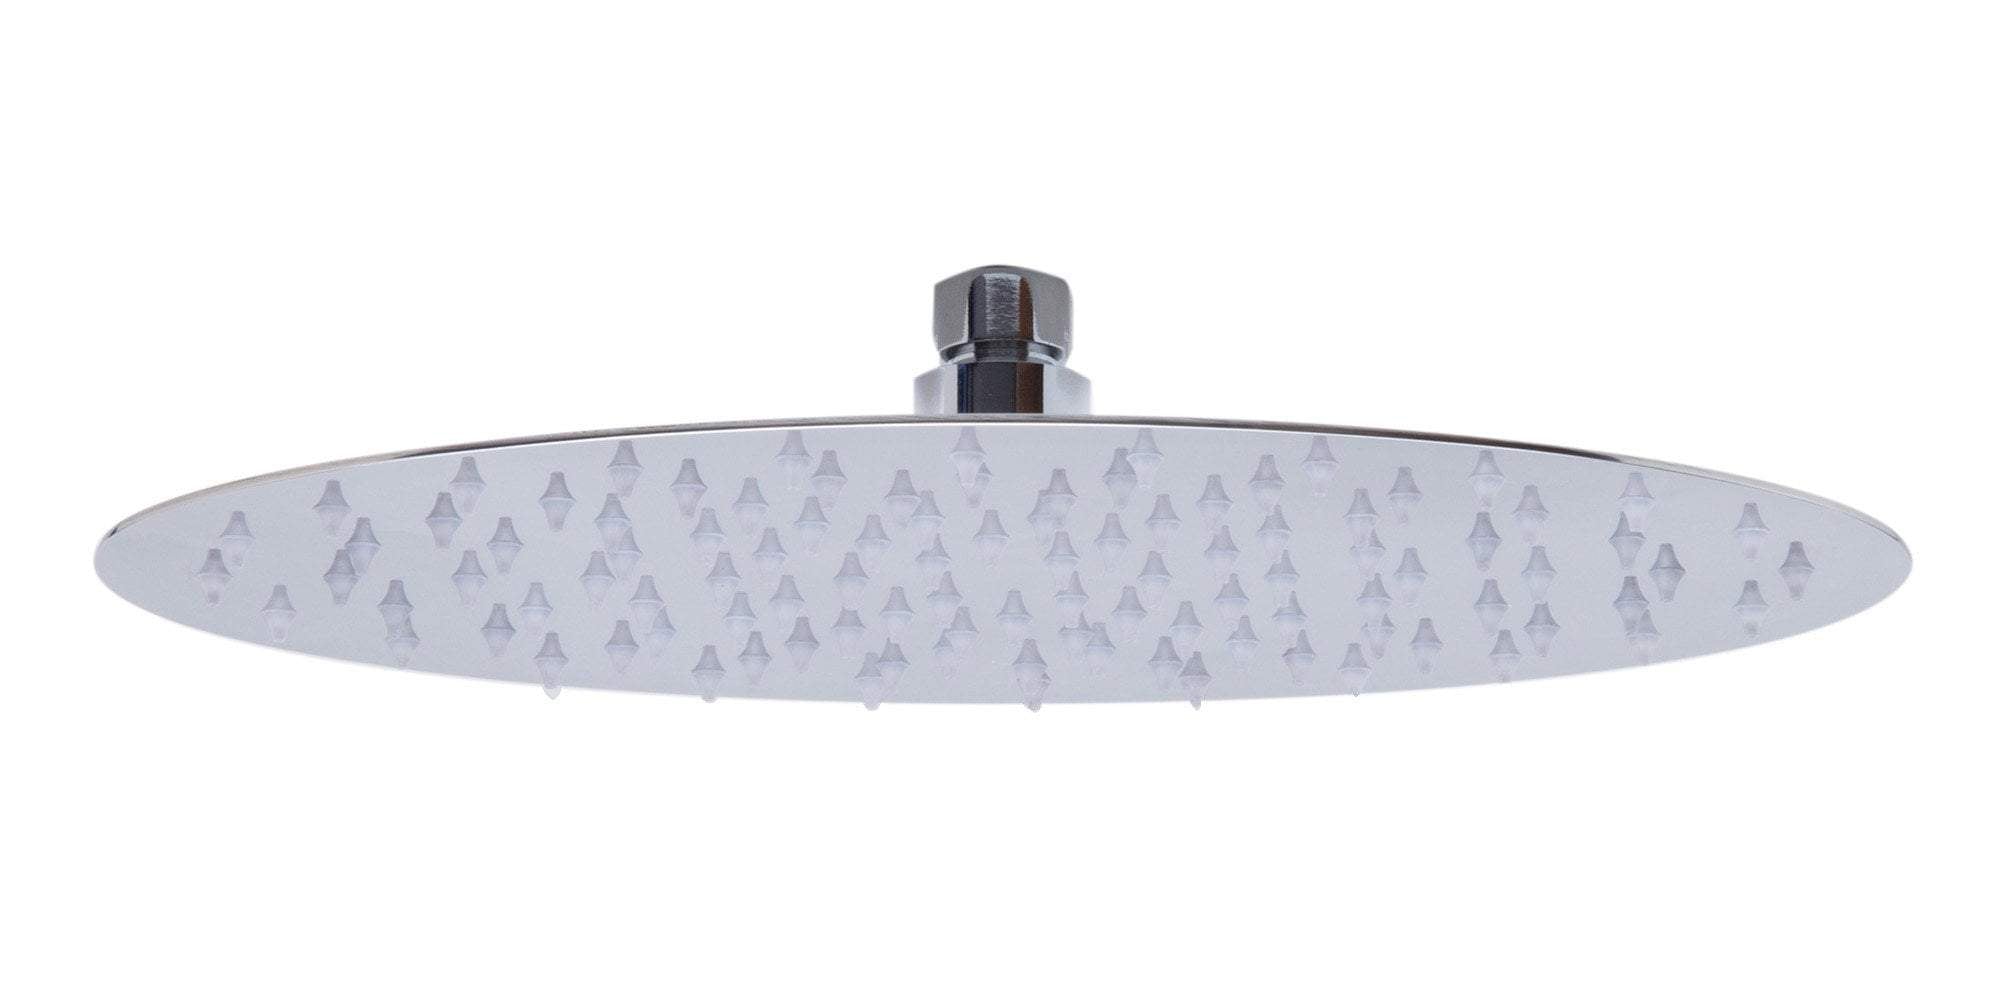 ALFI brand RAIN128-PSS 12" Oval Polished Solid Stainless Steel Ultra Thin Rain Shower Head